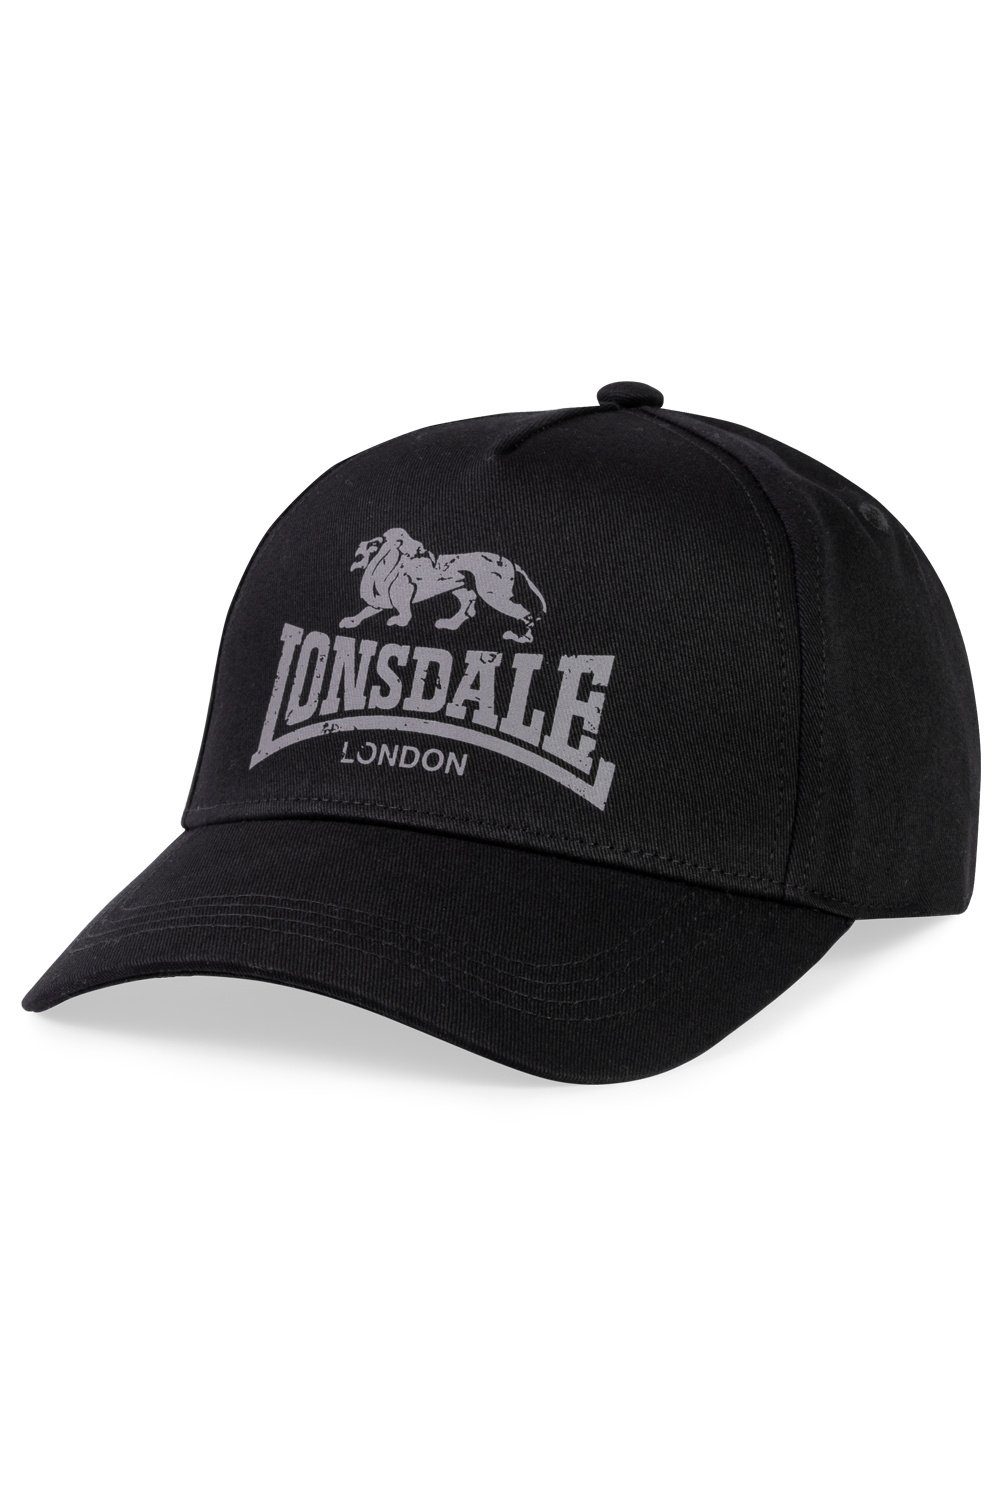 Lonsdale Baseball NORBURY Unisex Lonsdale Cap Cap